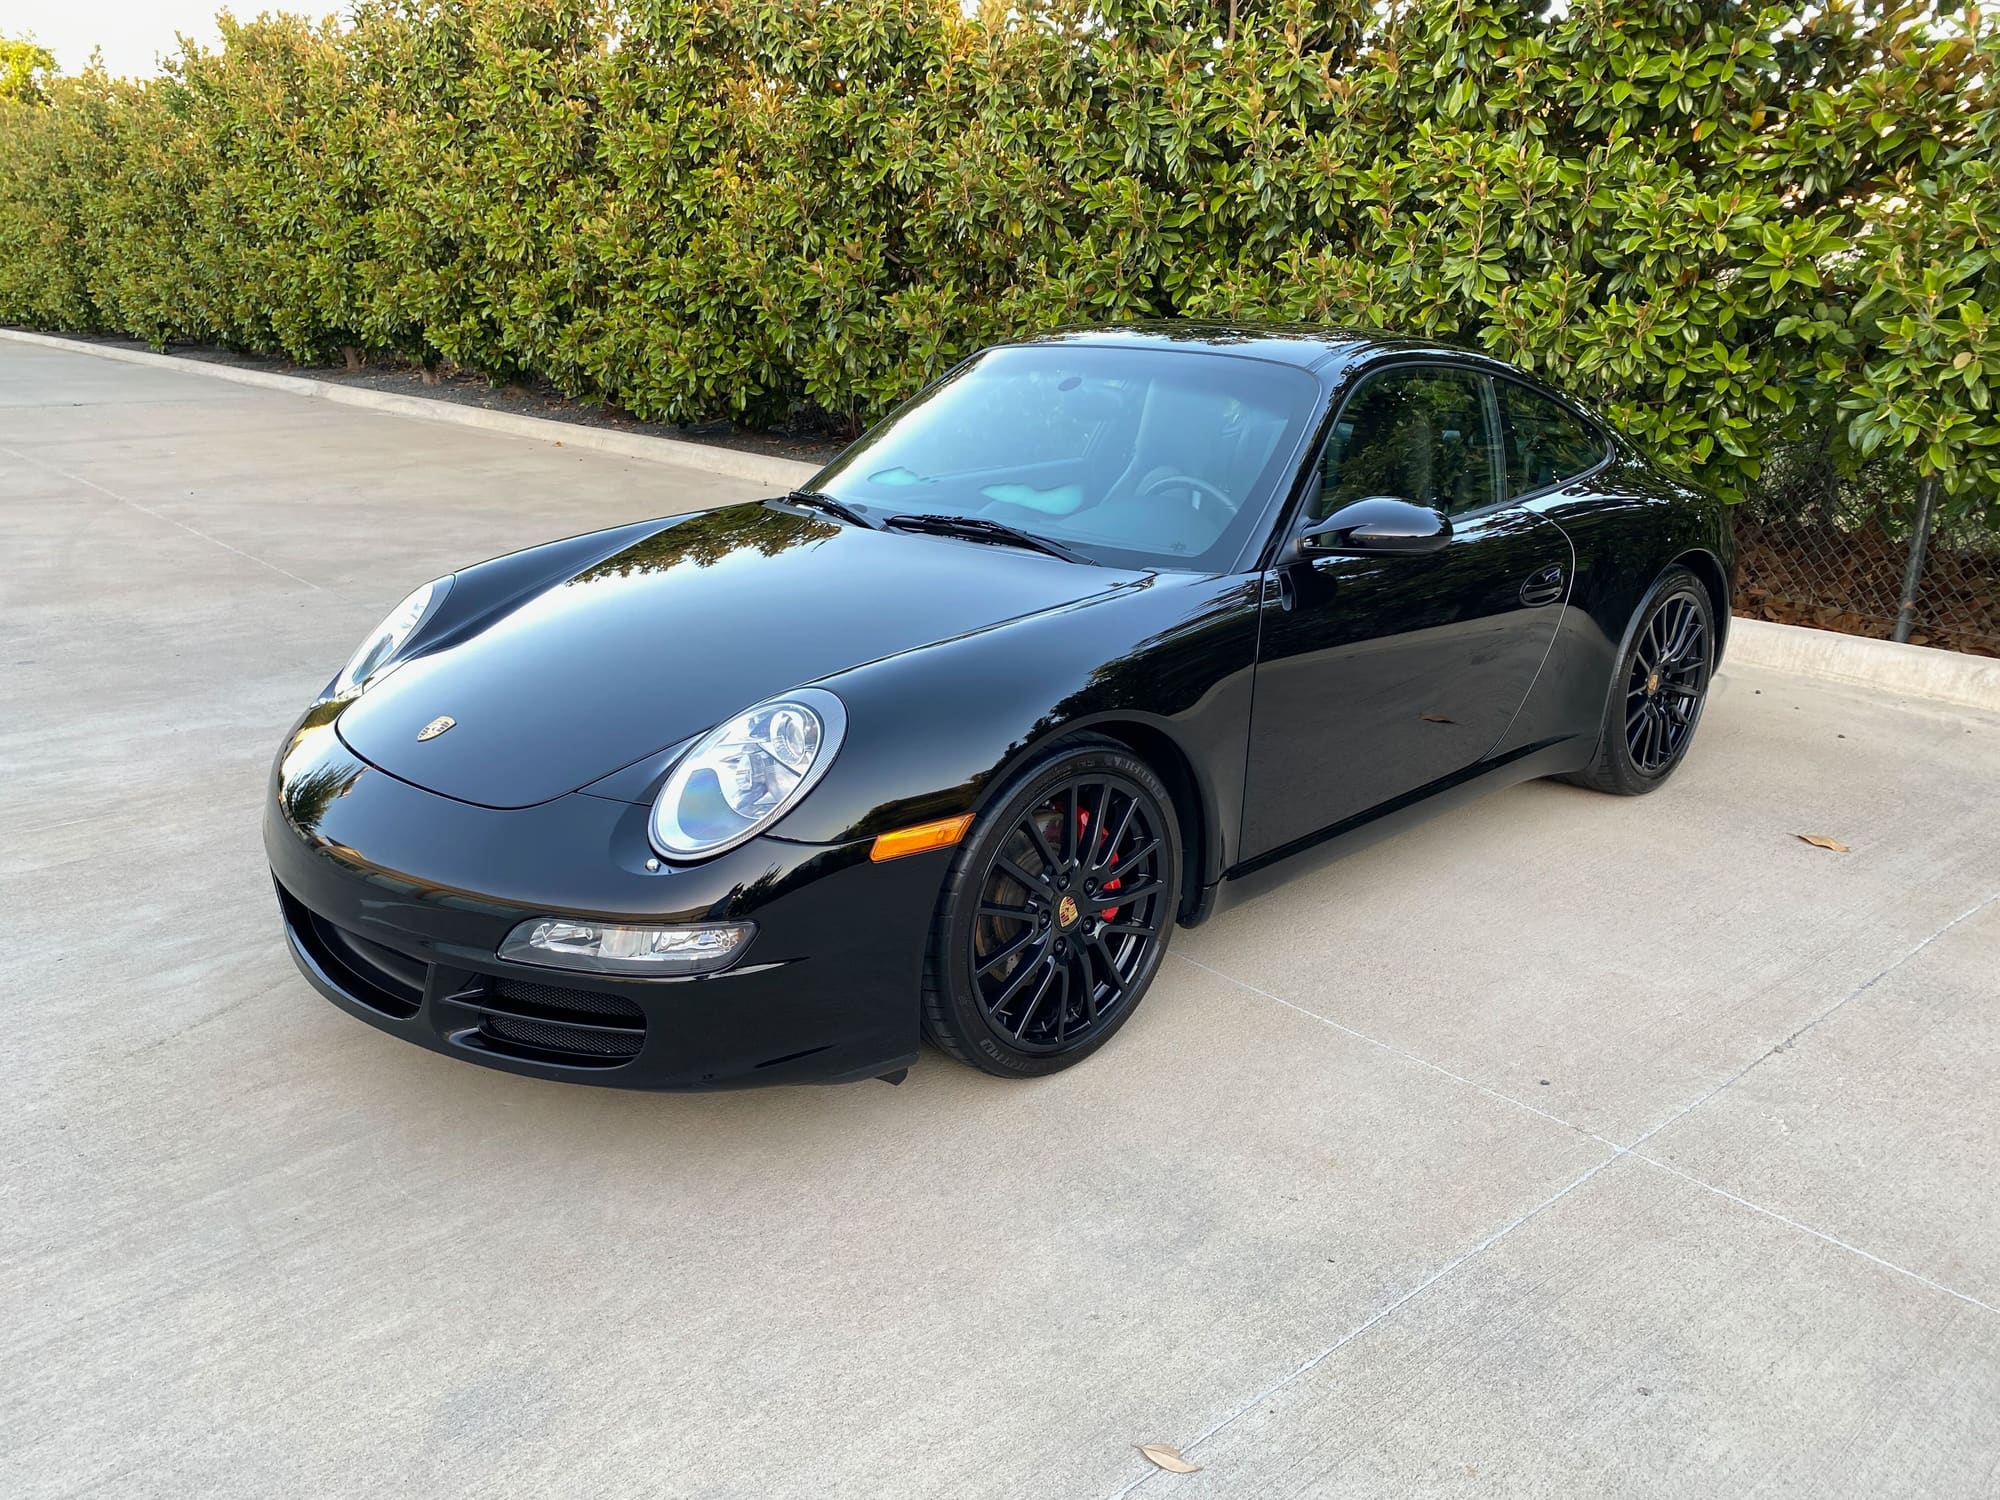 2001 Porsche 911 - 2007 Porsche 911 C2S Coupe (997S) 6 Speed.  Black/Black 53k miles - Used - VIN WP0AB29907S732266 - 53,900 Miles - 6 cyl - 2WD - Manual - Coupe - Black - Dallas, TX 75231, United States